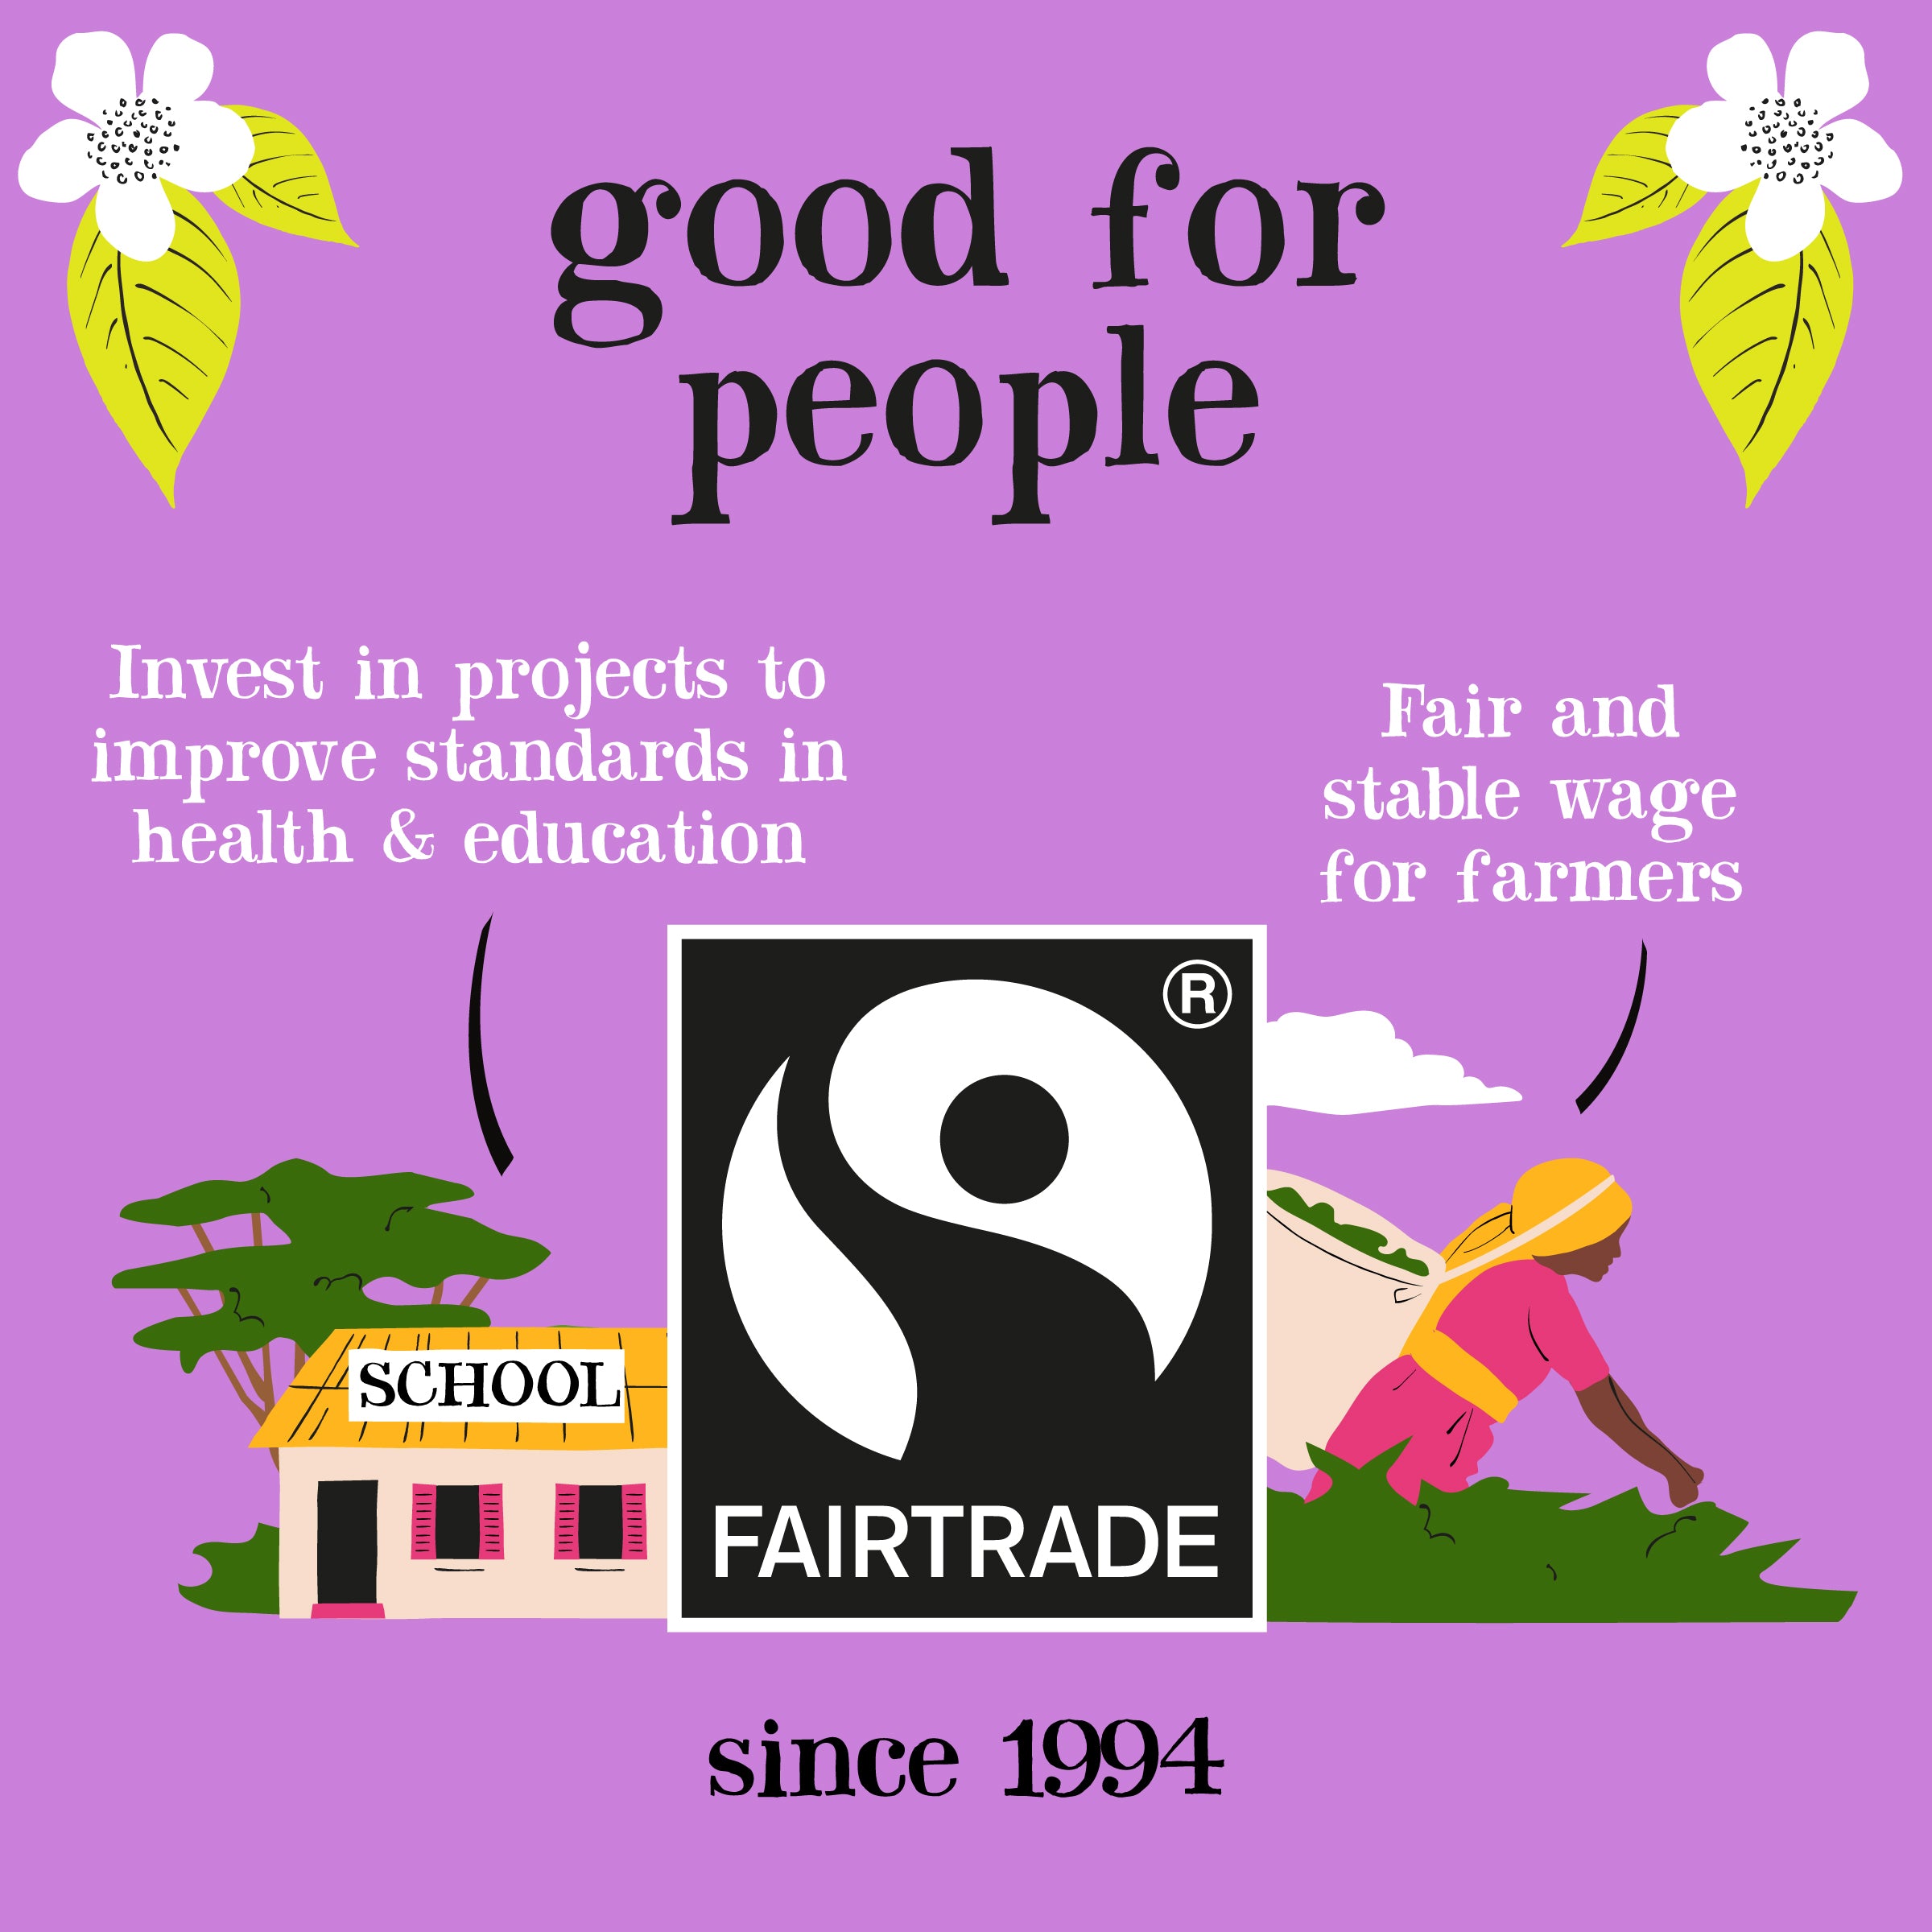 Organic Fairtrade Green with Lemon 80 bags